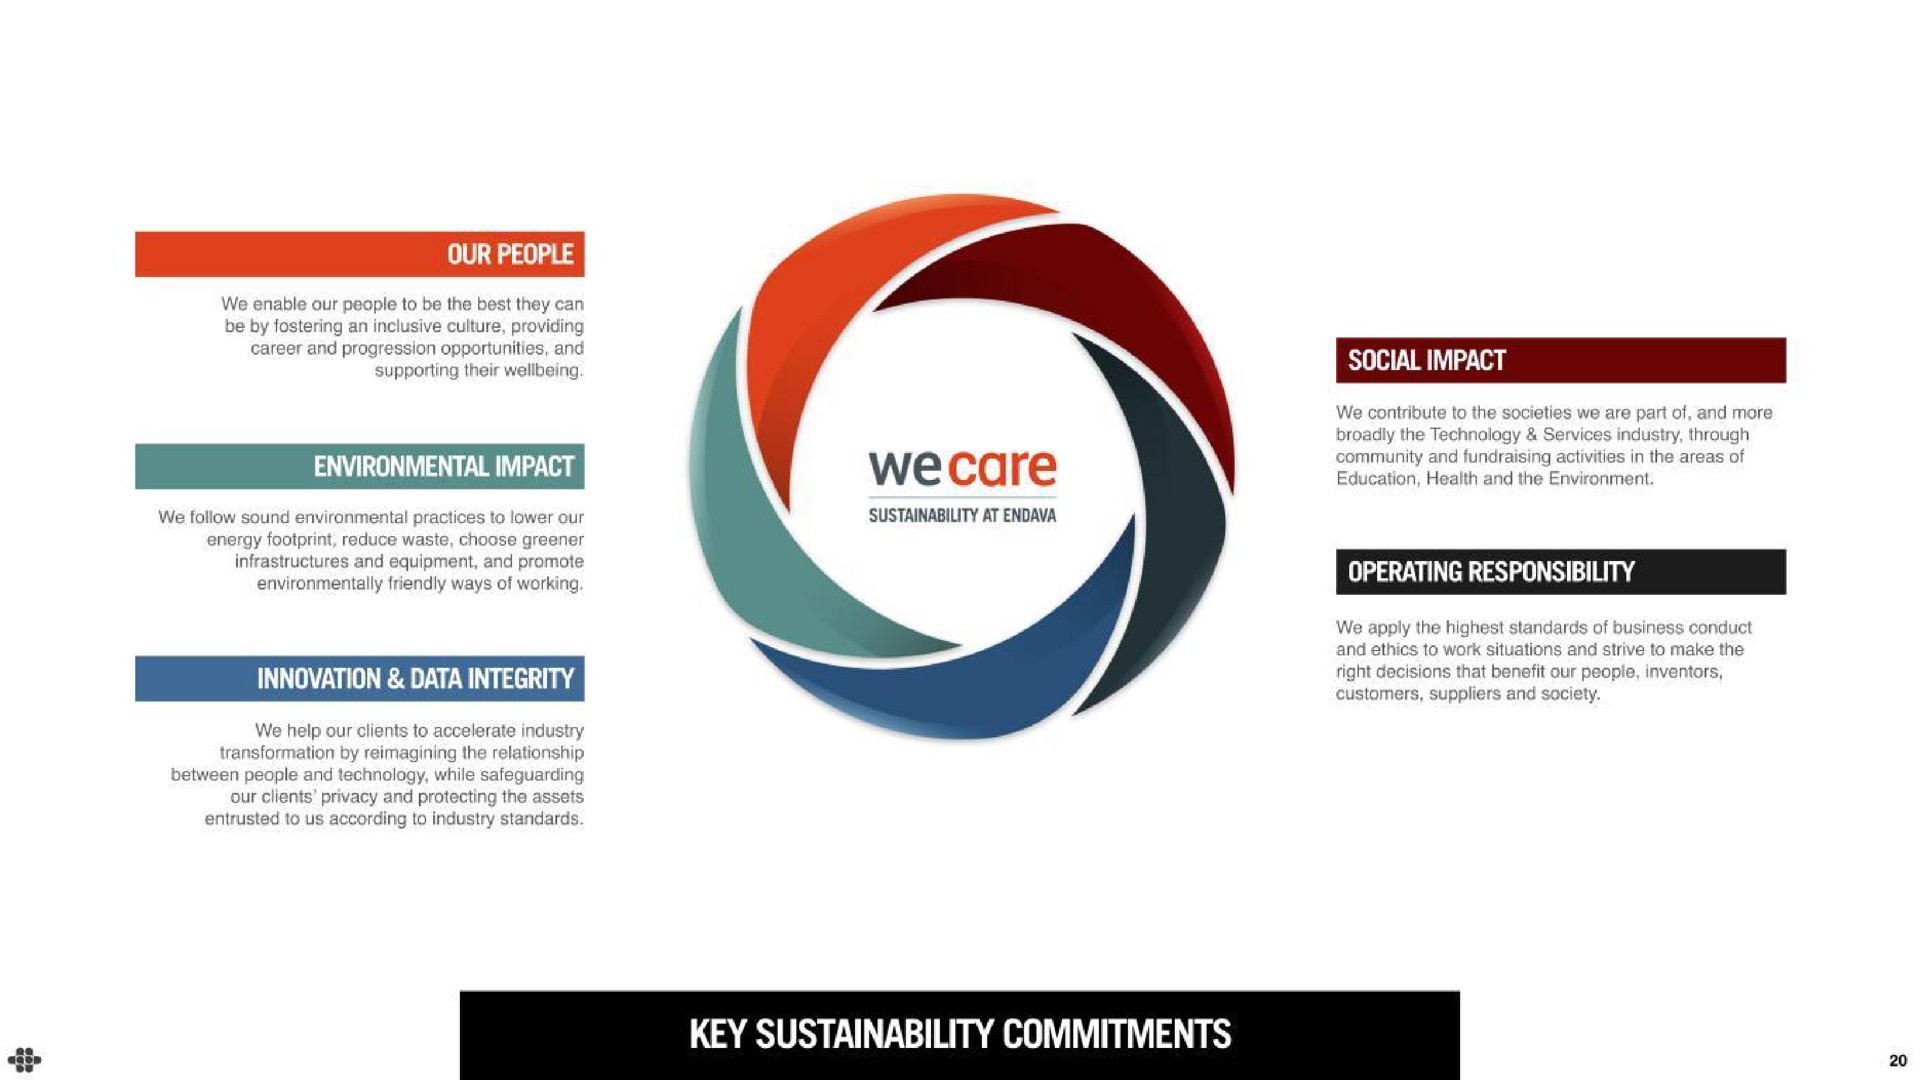 a environmental impact rue uss at social impact operating responsibility key commitments | Endava